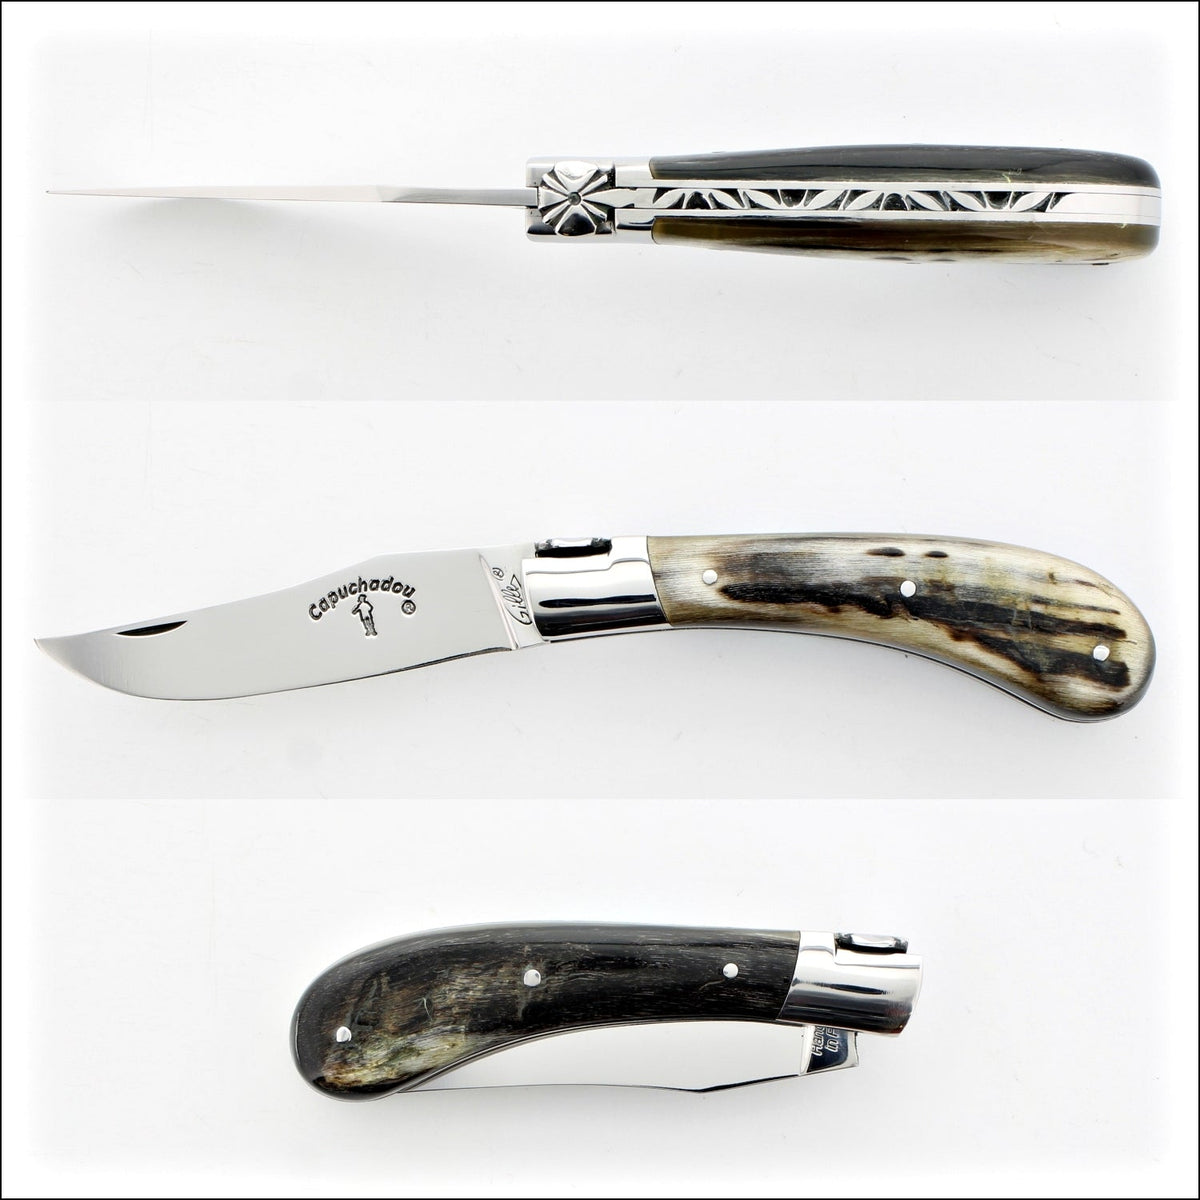 Capuchadou® 10 cm Classic Folding Knife Dark Ram Horn Tip